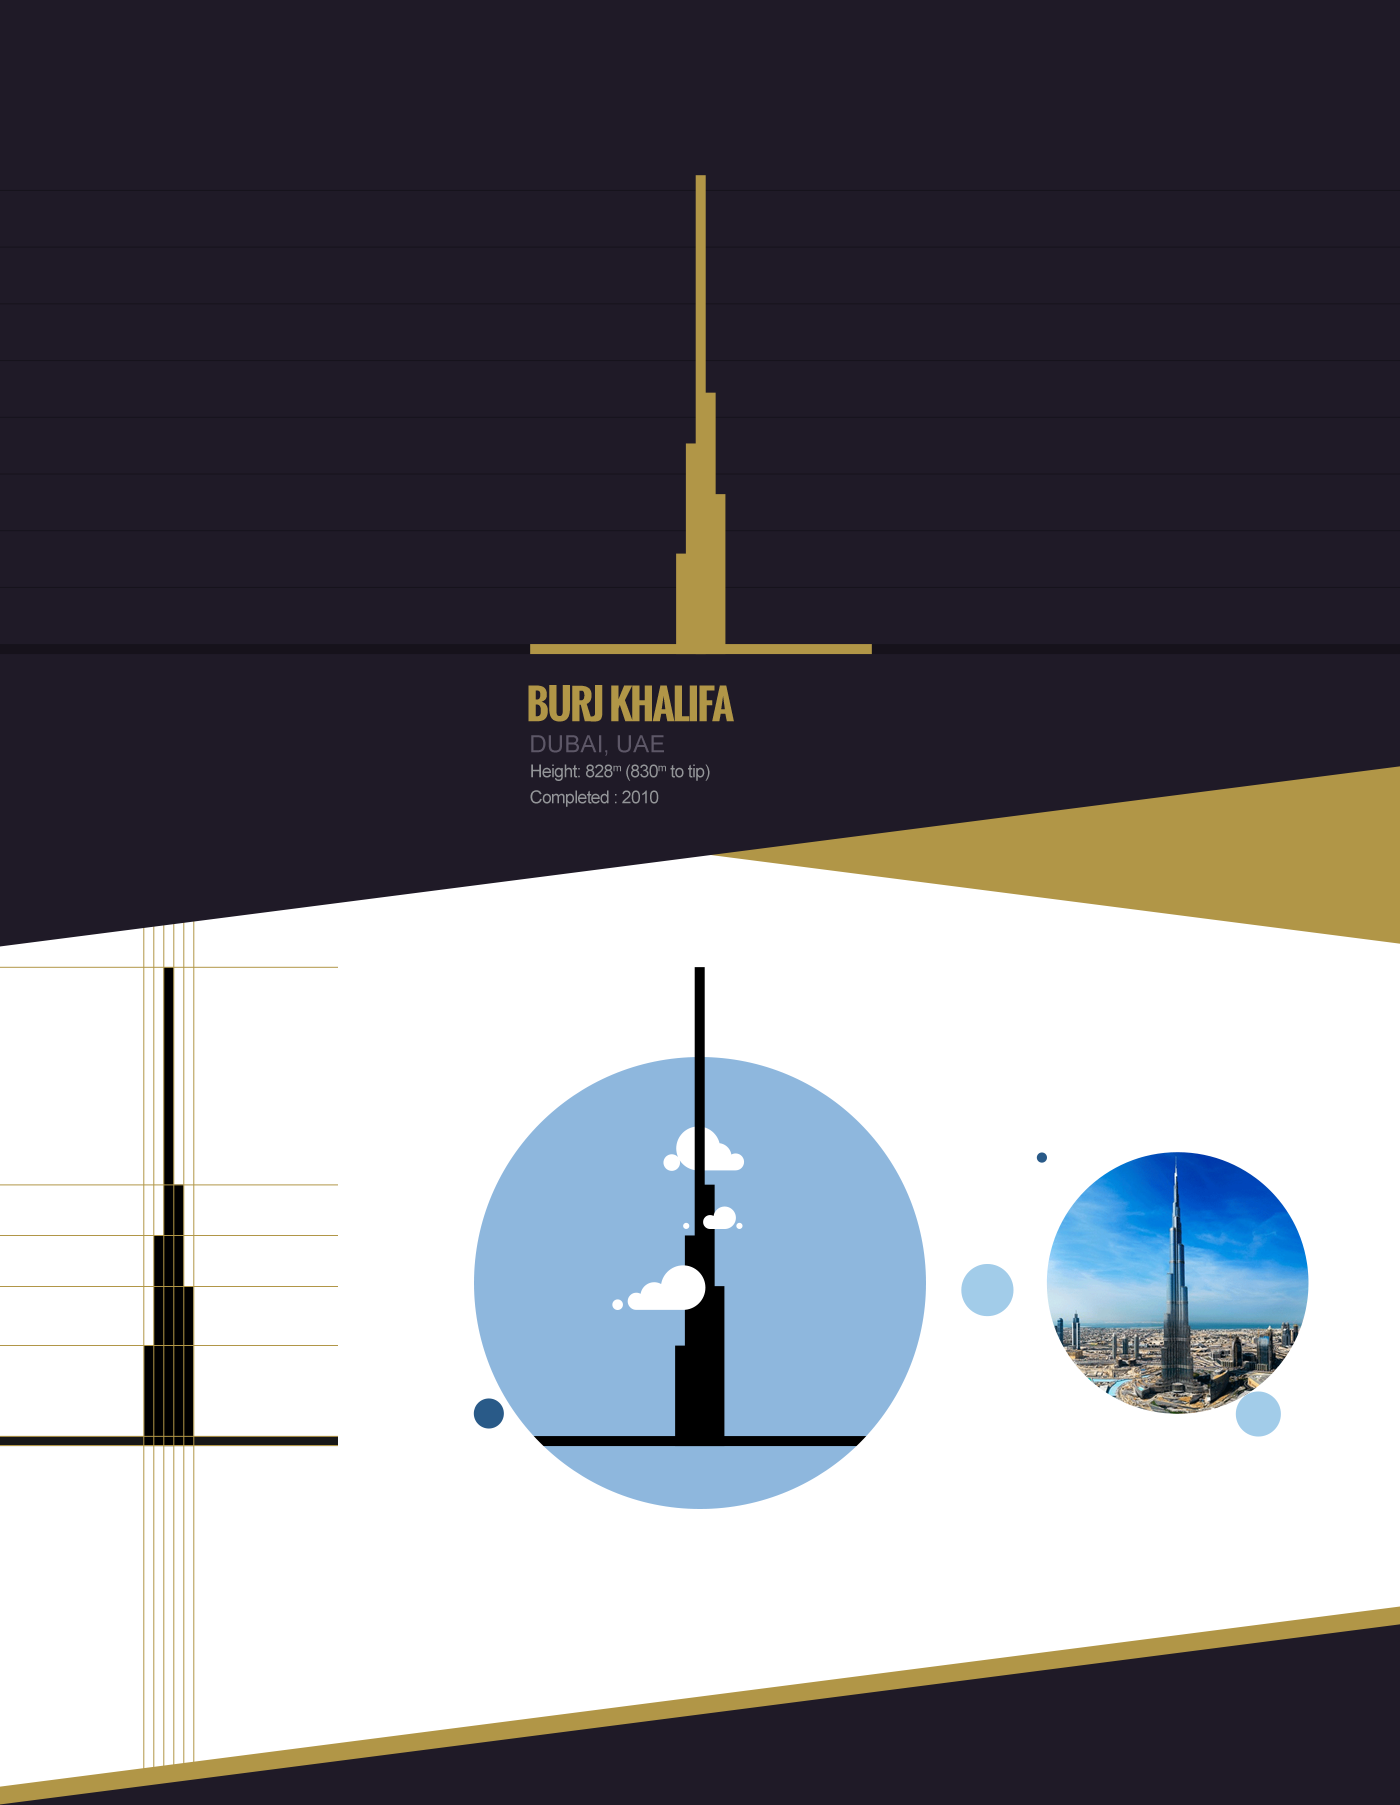 tower towers skyscraper eiffel khalifa makkah canton CN wtc milad ostankino Empire shanghai PETRONAS BURJ